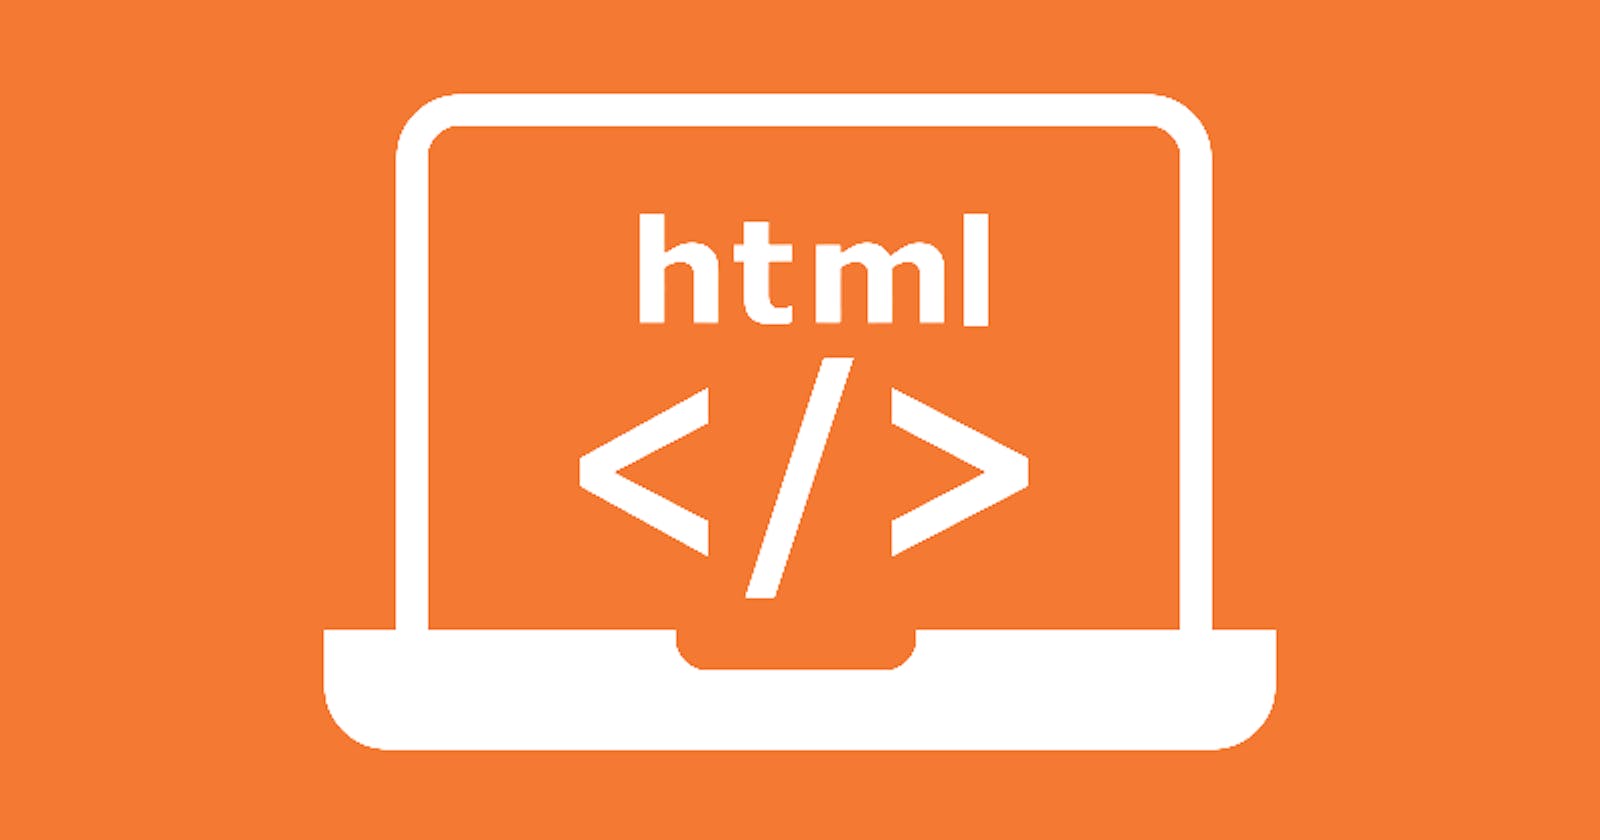 HTML - History Time Money Language